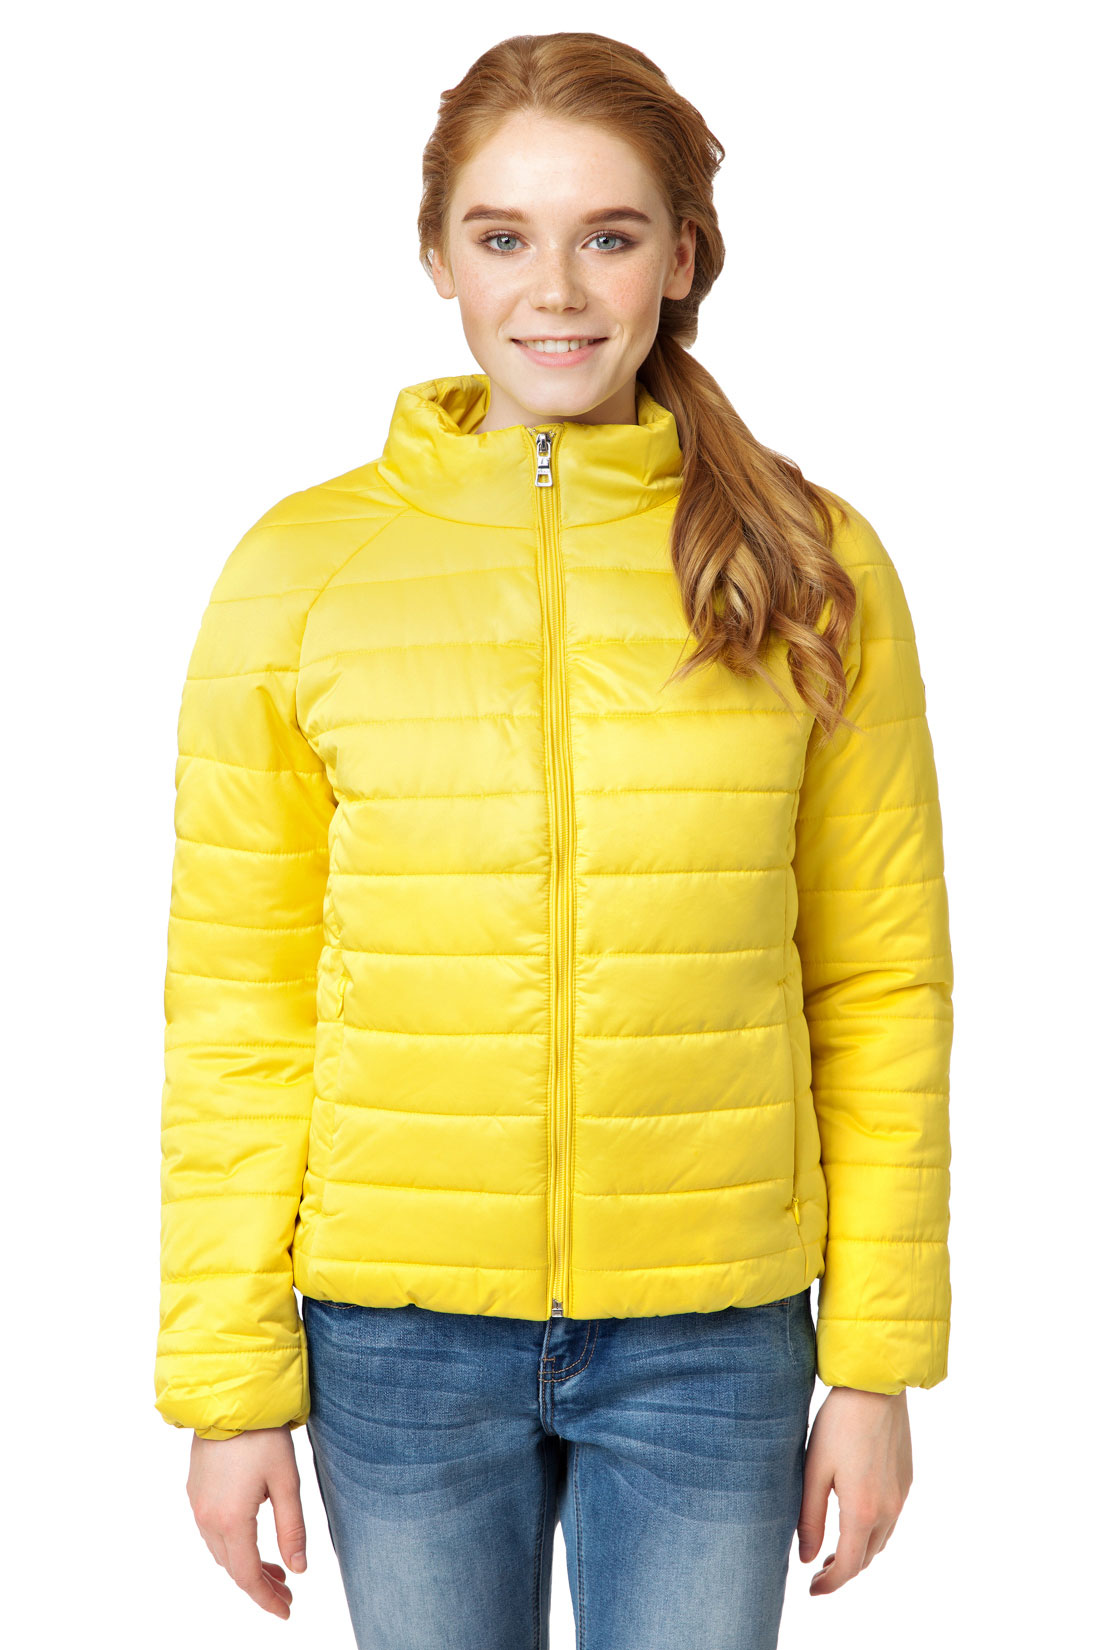 Куртка в спортивном стиле (арт. baon B037007), размер S, цвет желтый Куртка в спортивном стиле (арт. baon B037007) - фото 1